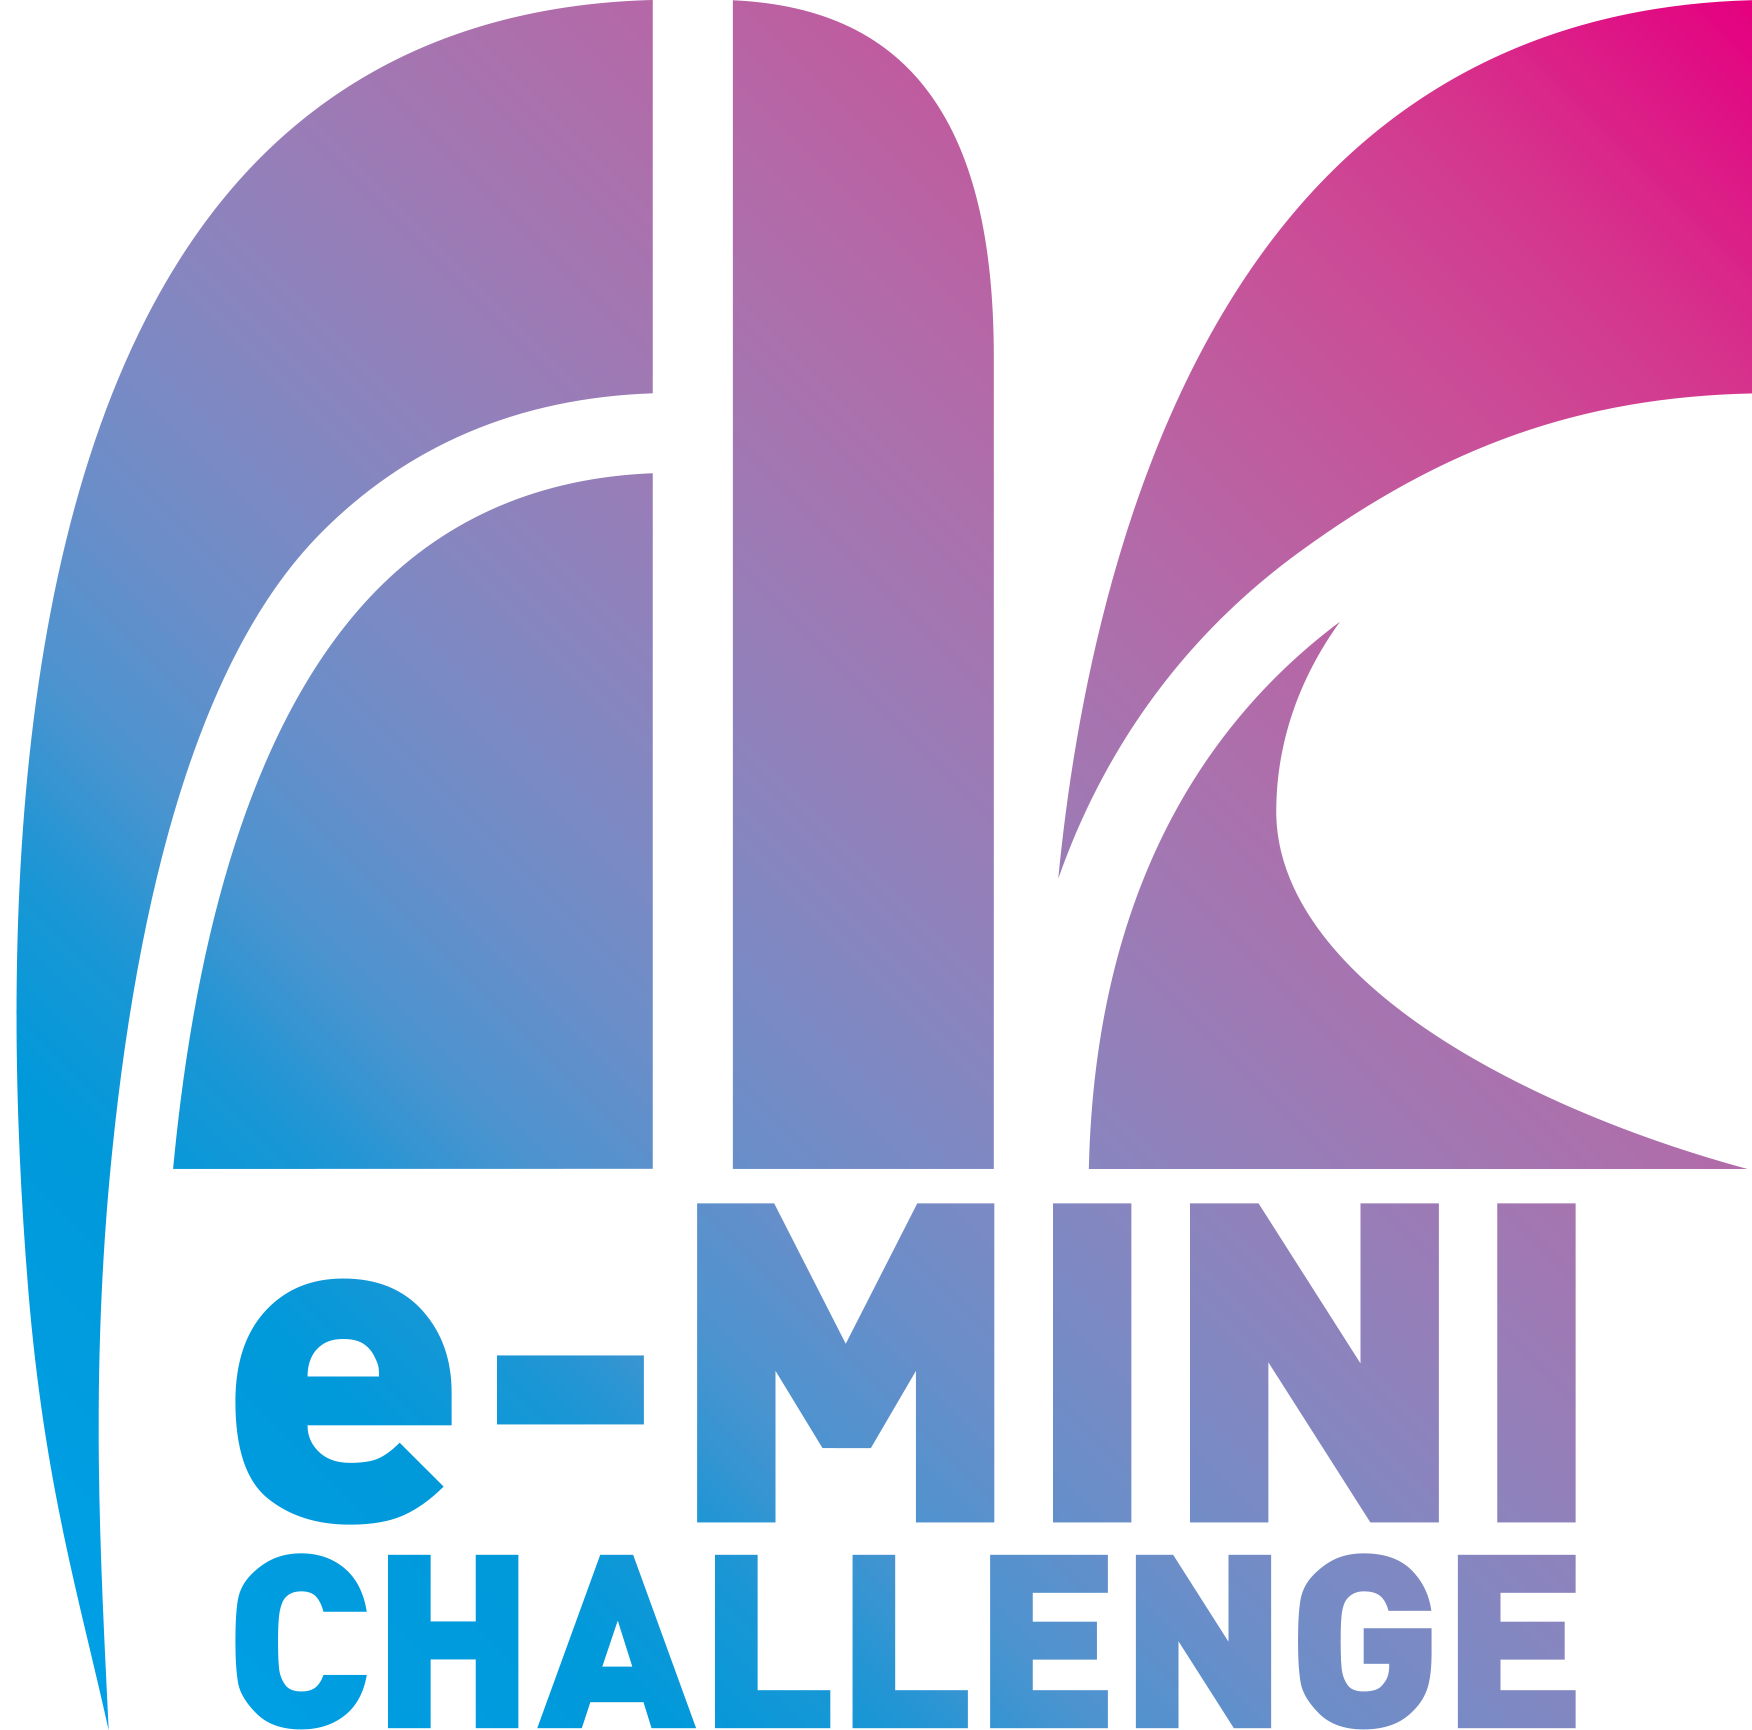 e-MINI CHALLENGE® 2021 S2 Rd.2 A/B ポイントランキング公開